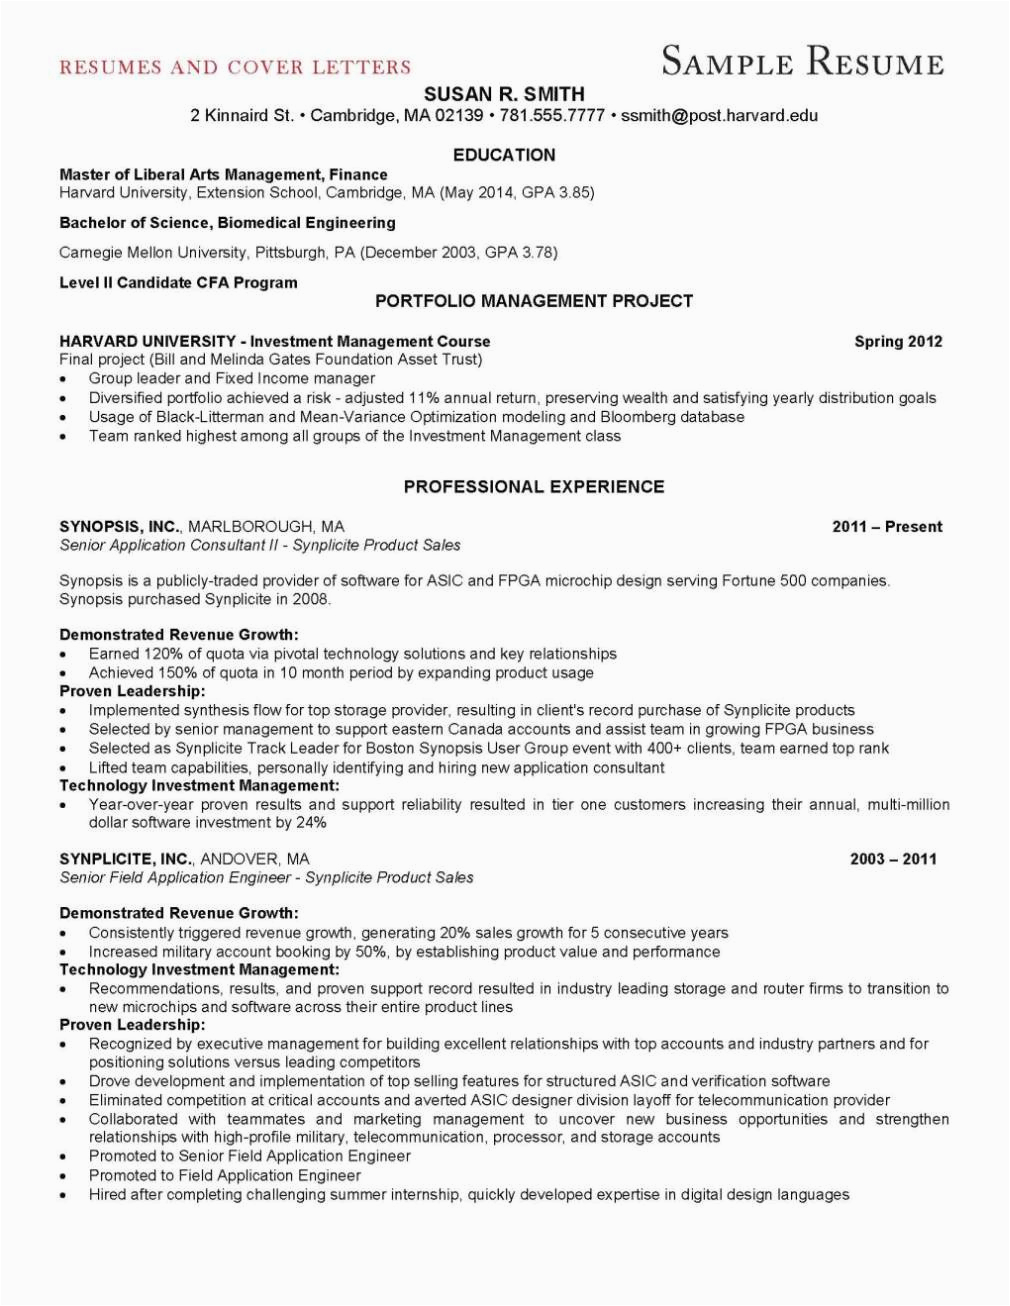 Resume for Masters Application Sample Harvard Mba Resume Sample Harvard